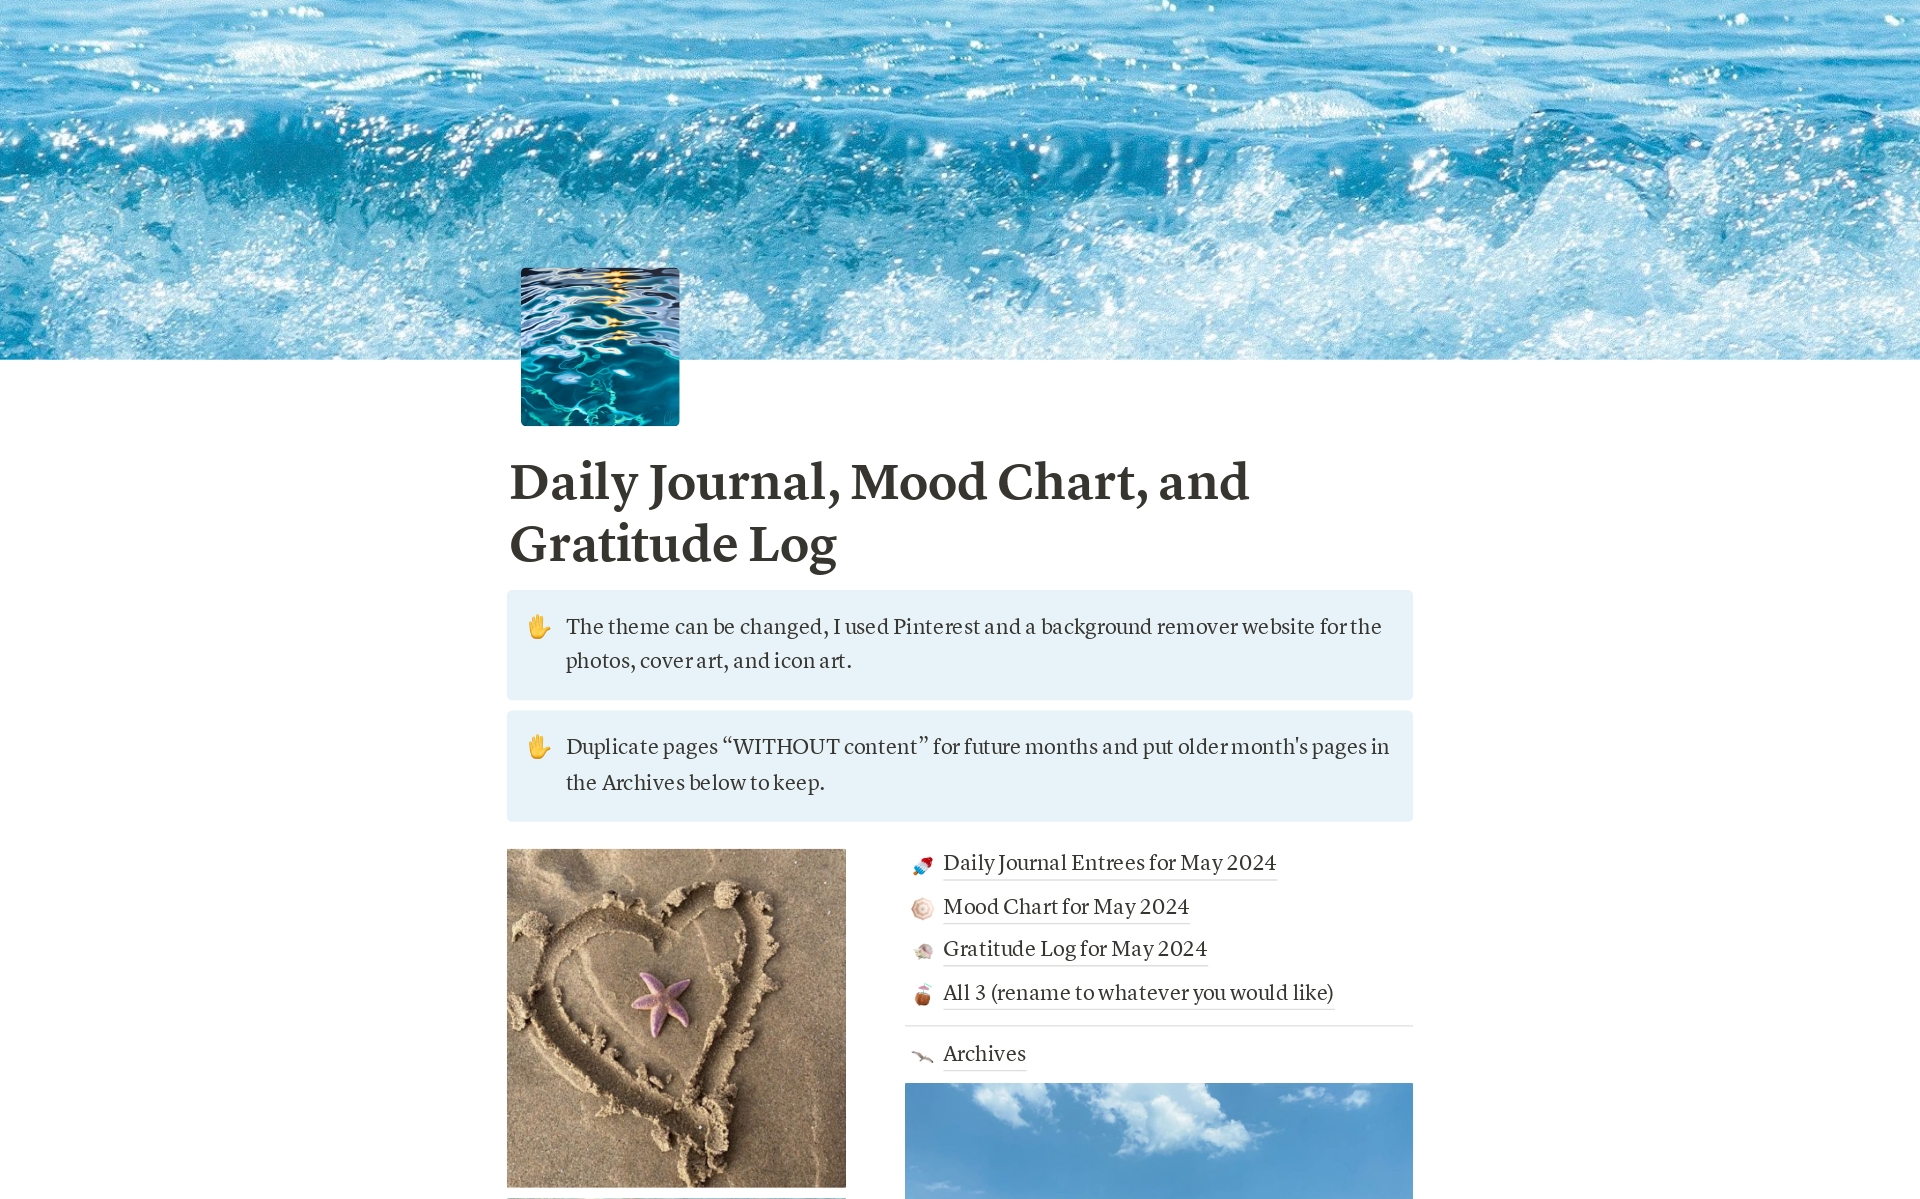 Vista previa de plantilla para Daily Journal, Mood Chart, and Gratitude Log